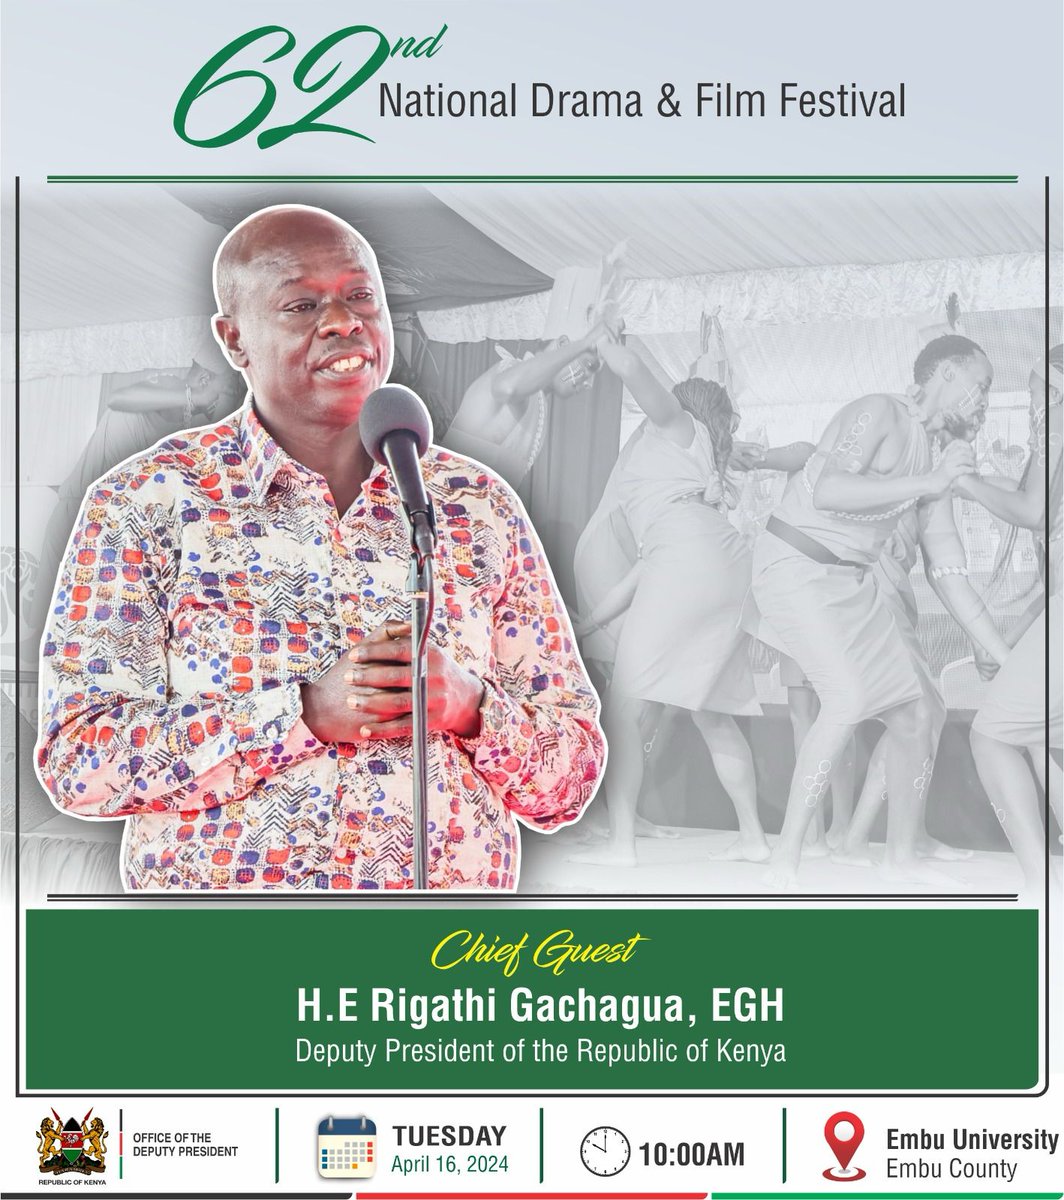 Dp H.E. Rigathi Gachagua, EGH expected at embu University for Nationa drama and festival. 
#RigathiOnAssignment